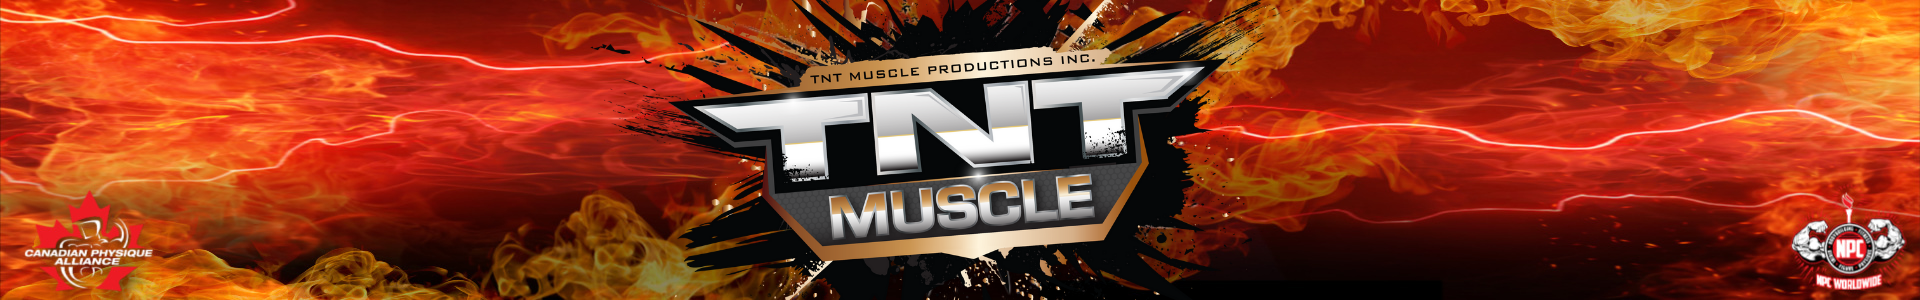 TMT Muscle